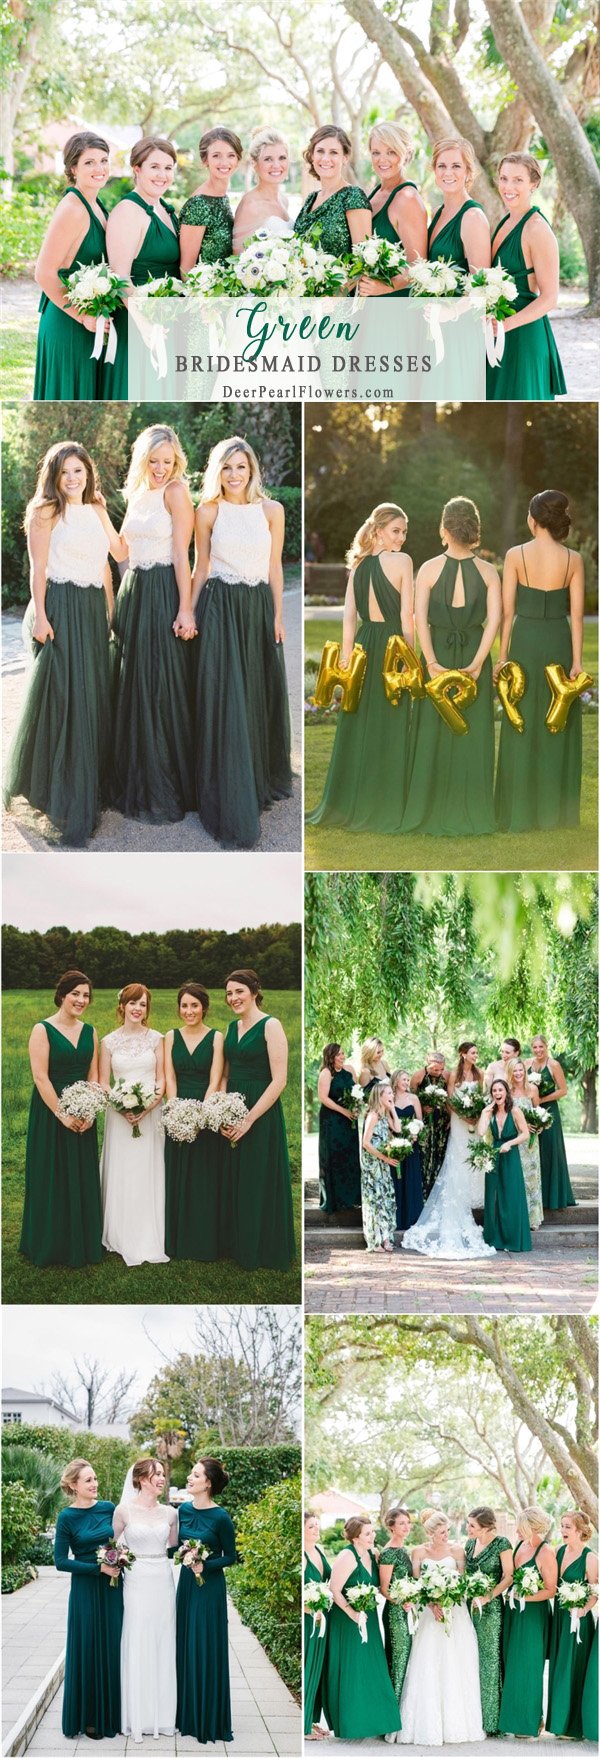 Greenery bridesmaid dress ideas